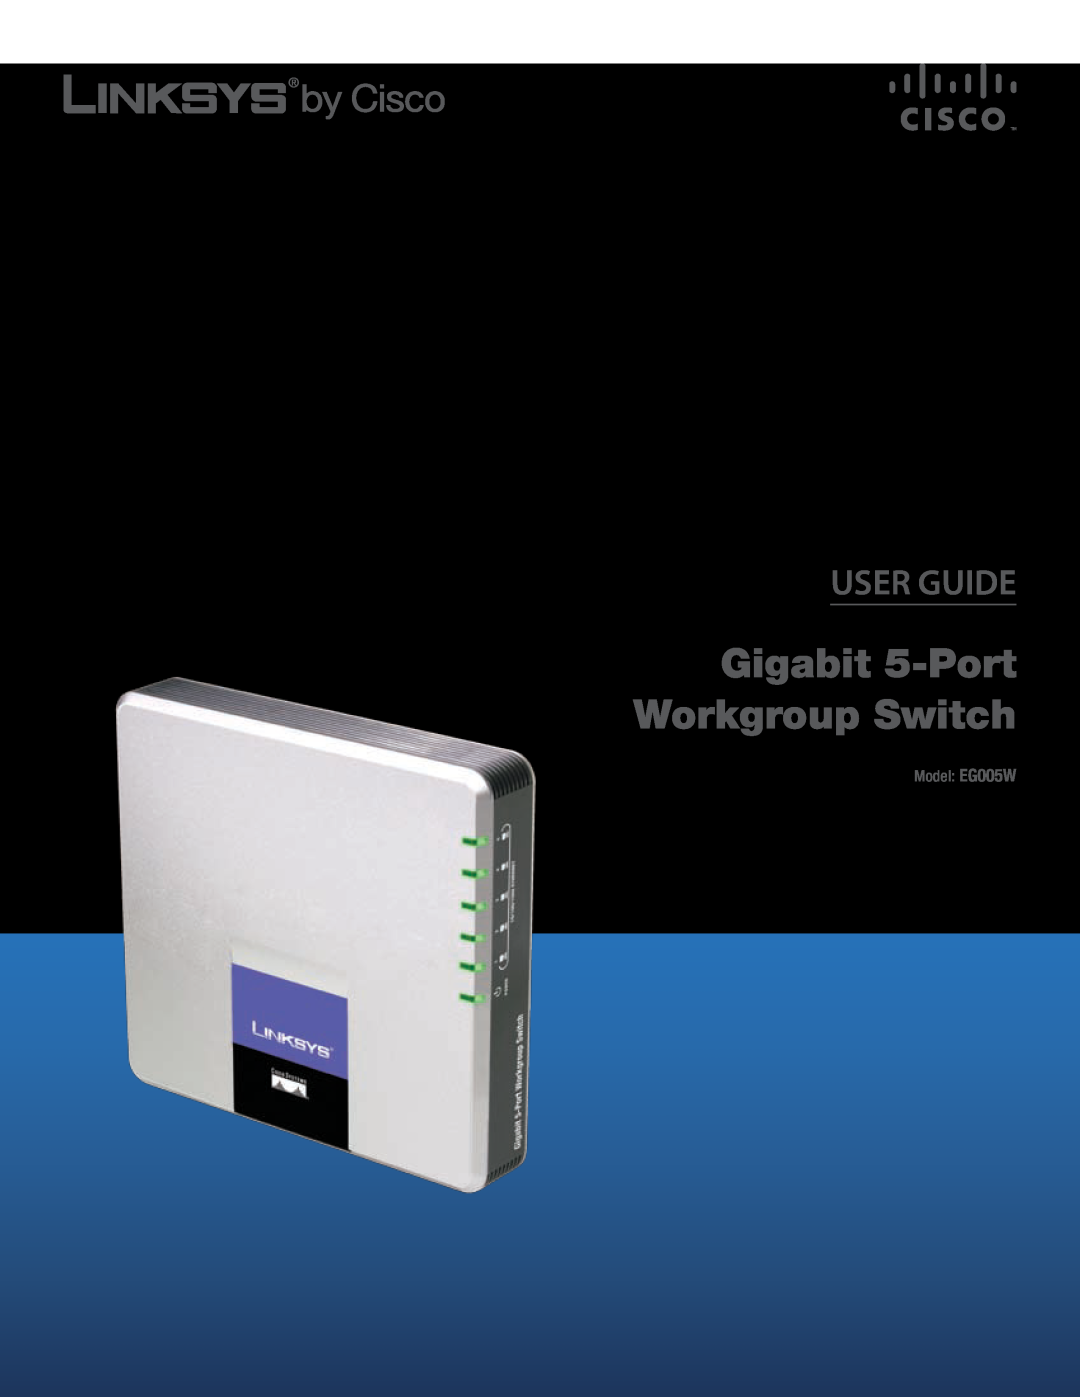 Cisco Systems manual Gigabit 5-Port Workgroup Switch, User Guide, Model EG005W 